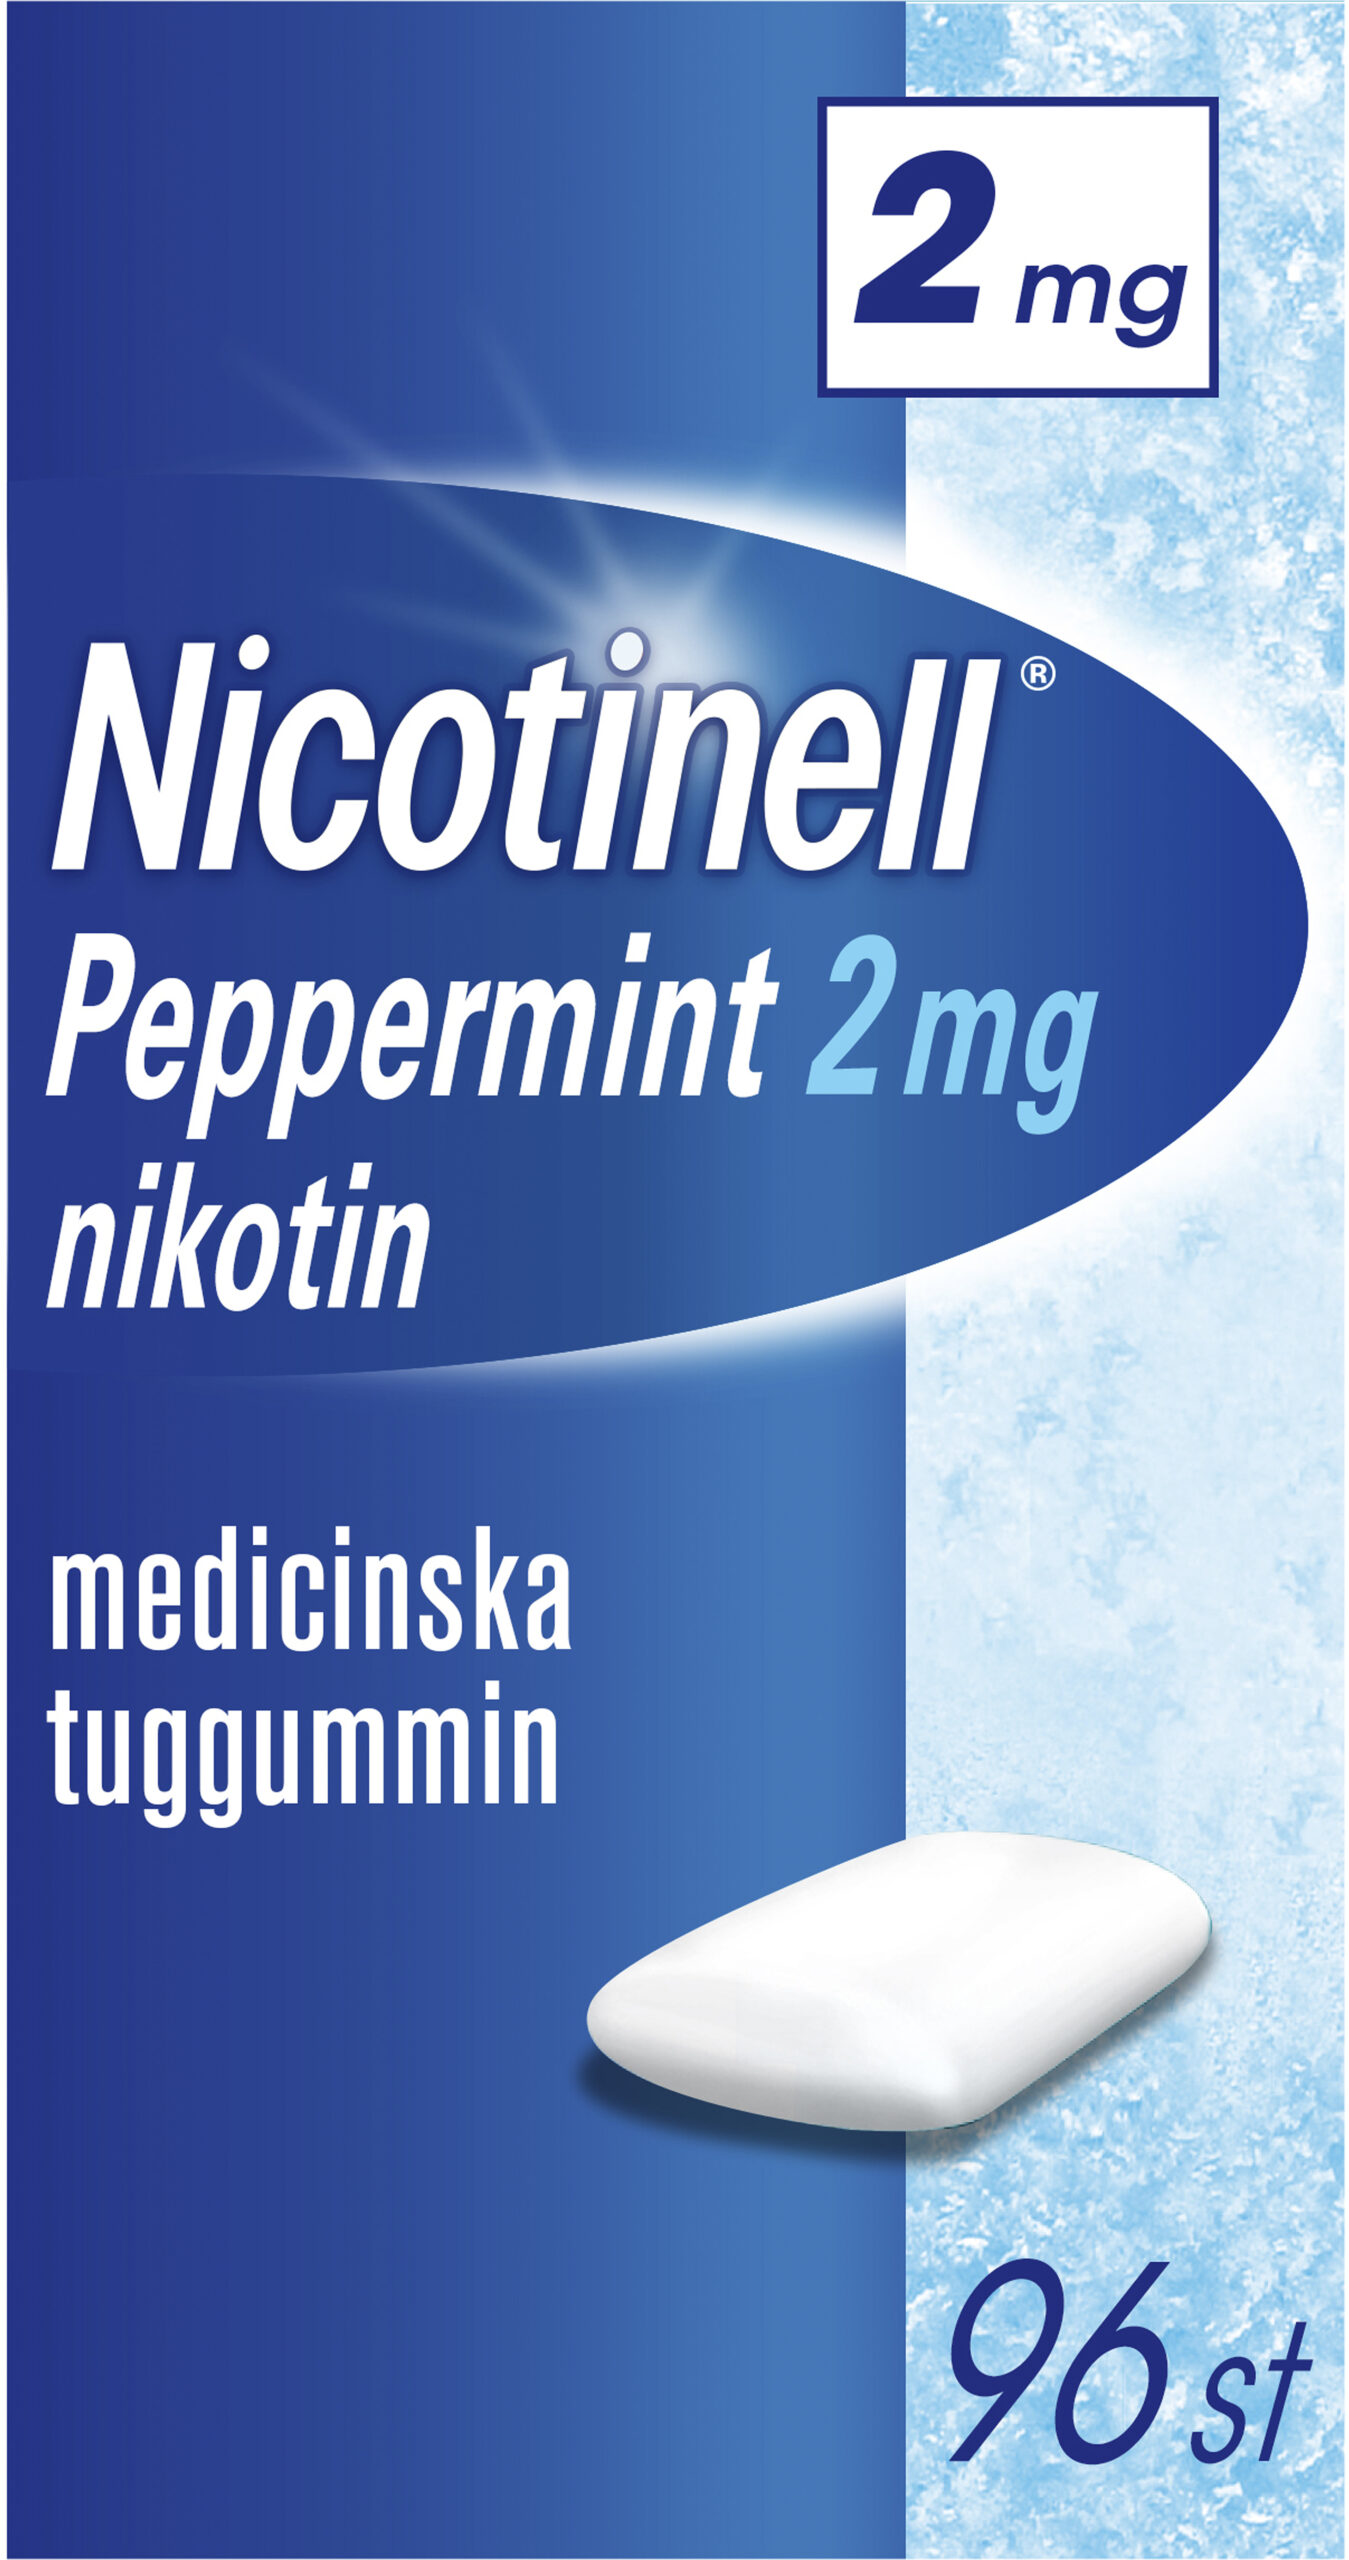 Nicotinell Peppermint Medicinskt tuggummi 2mg Blister, 96tuggummin